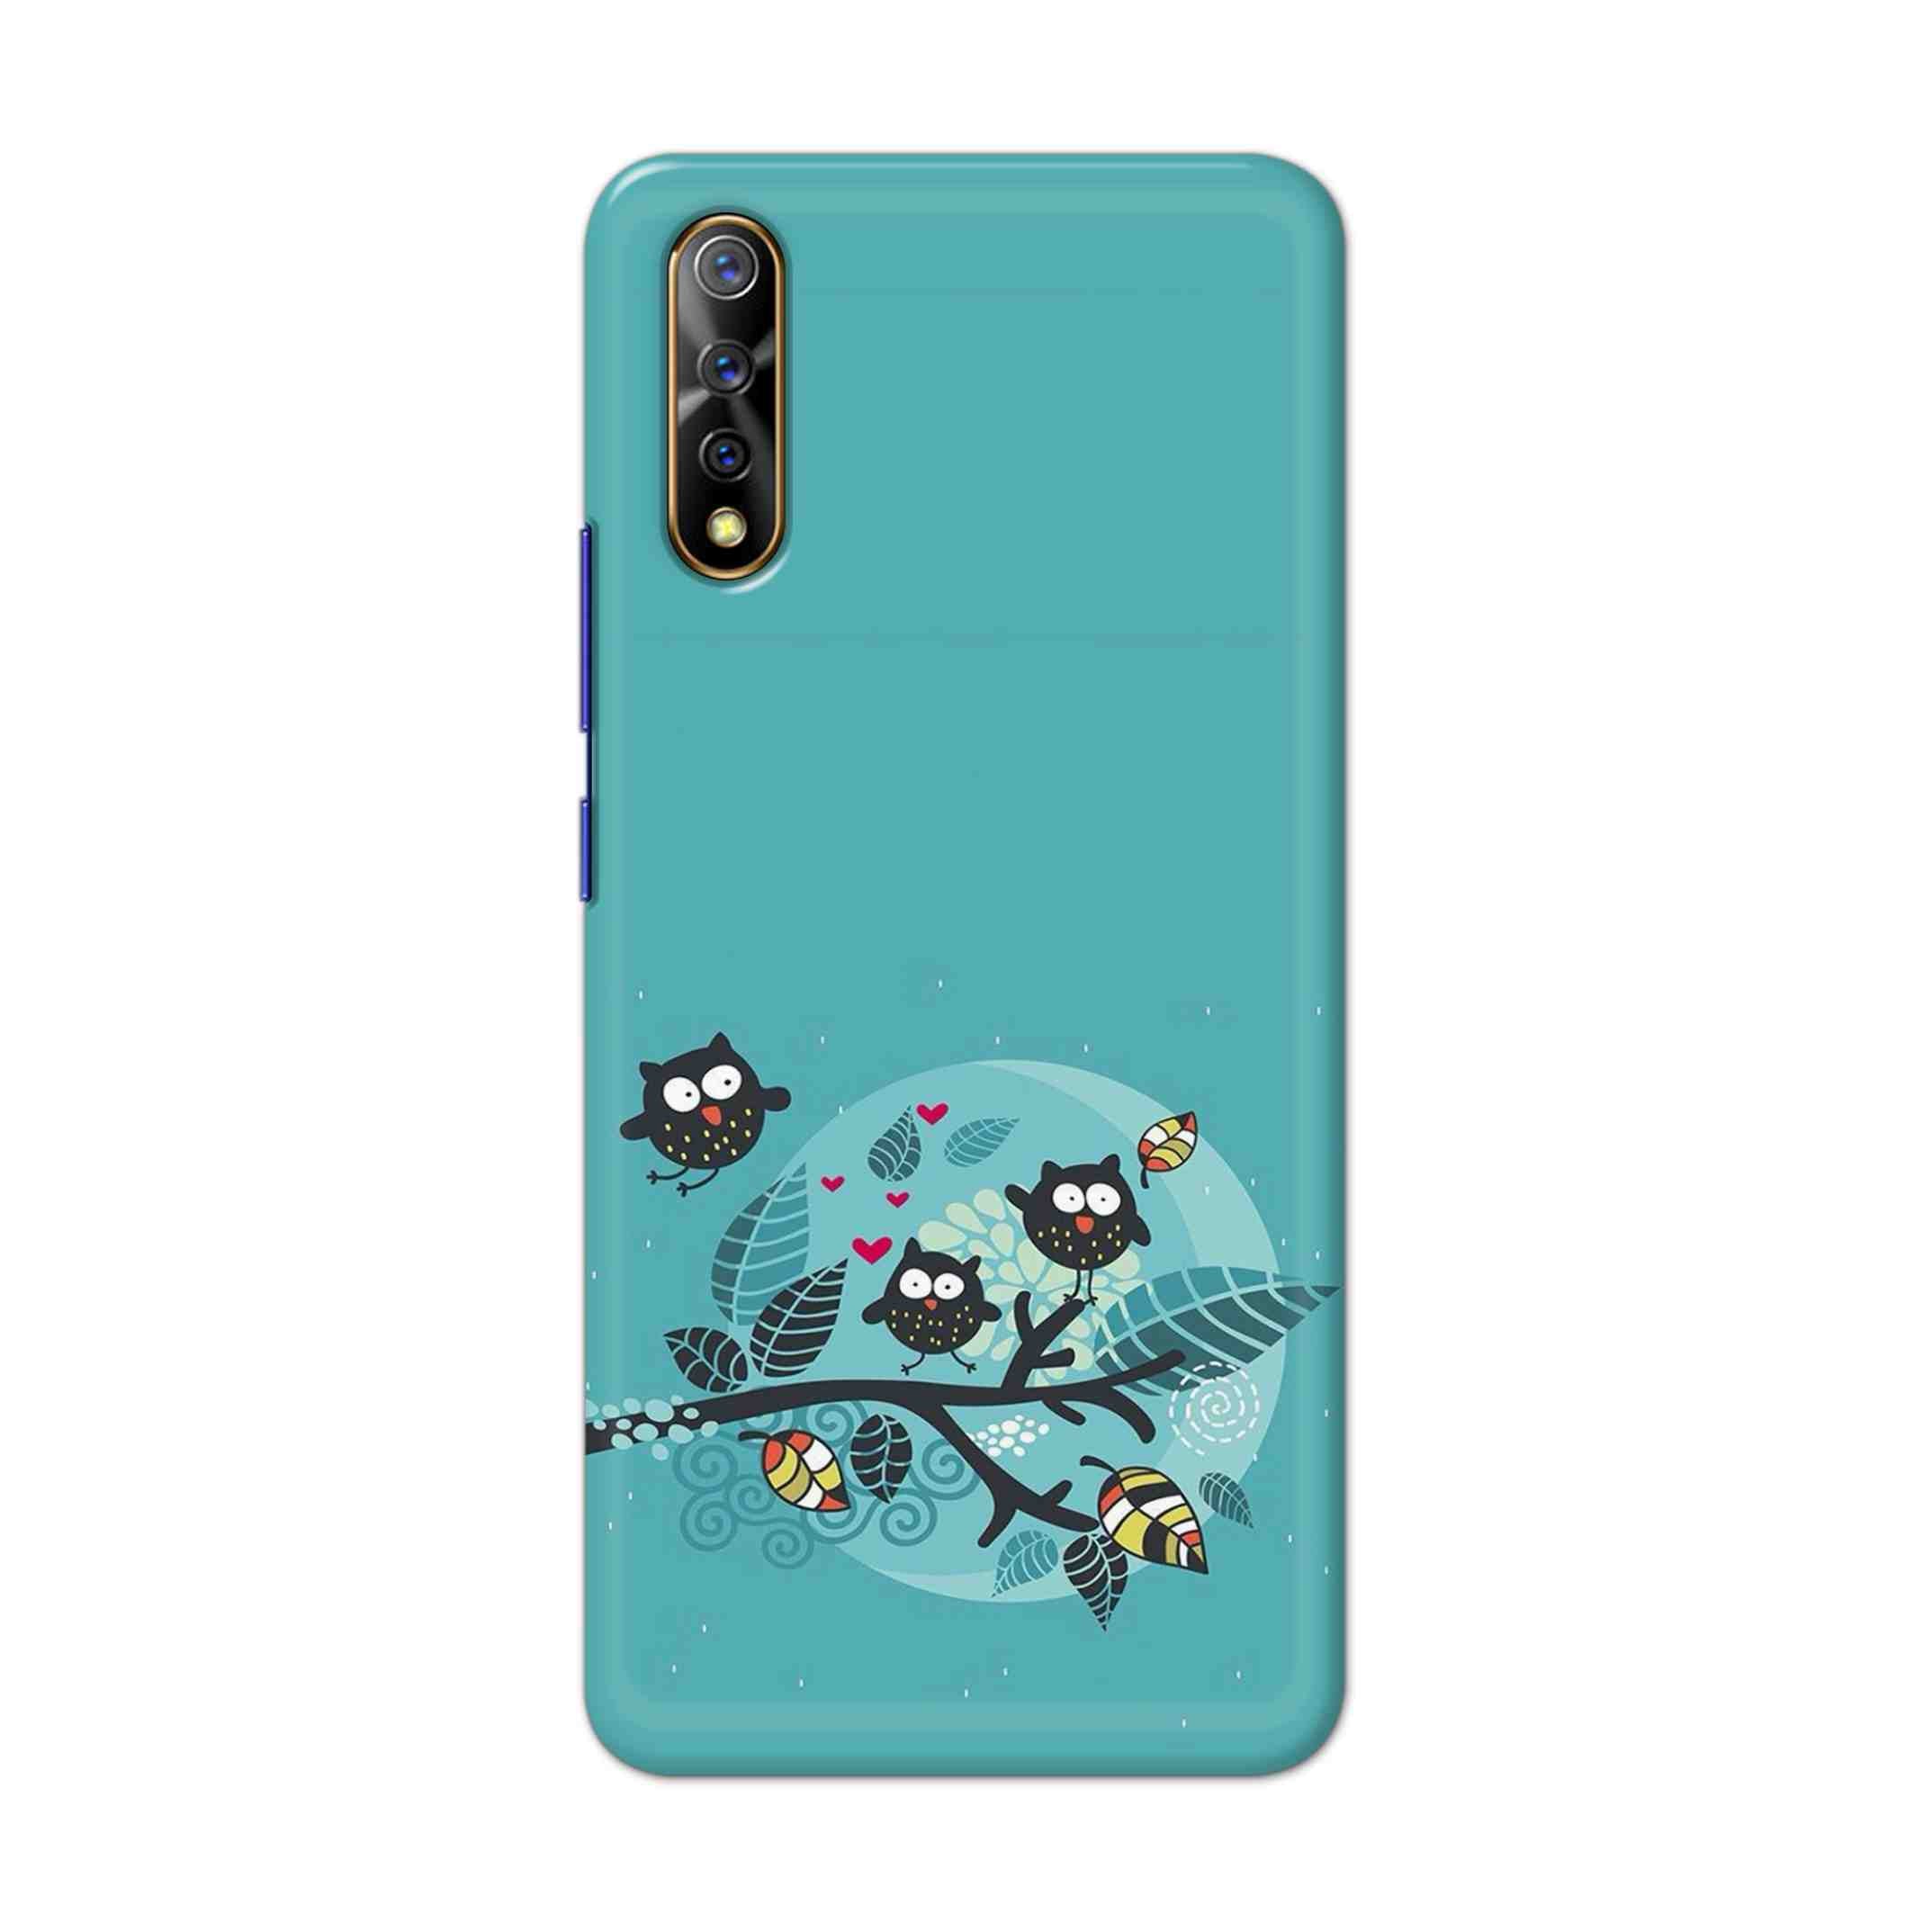 Buy Owl Hard Back Mobile Phone Case Cover For Vivo S1 / Z1x Online